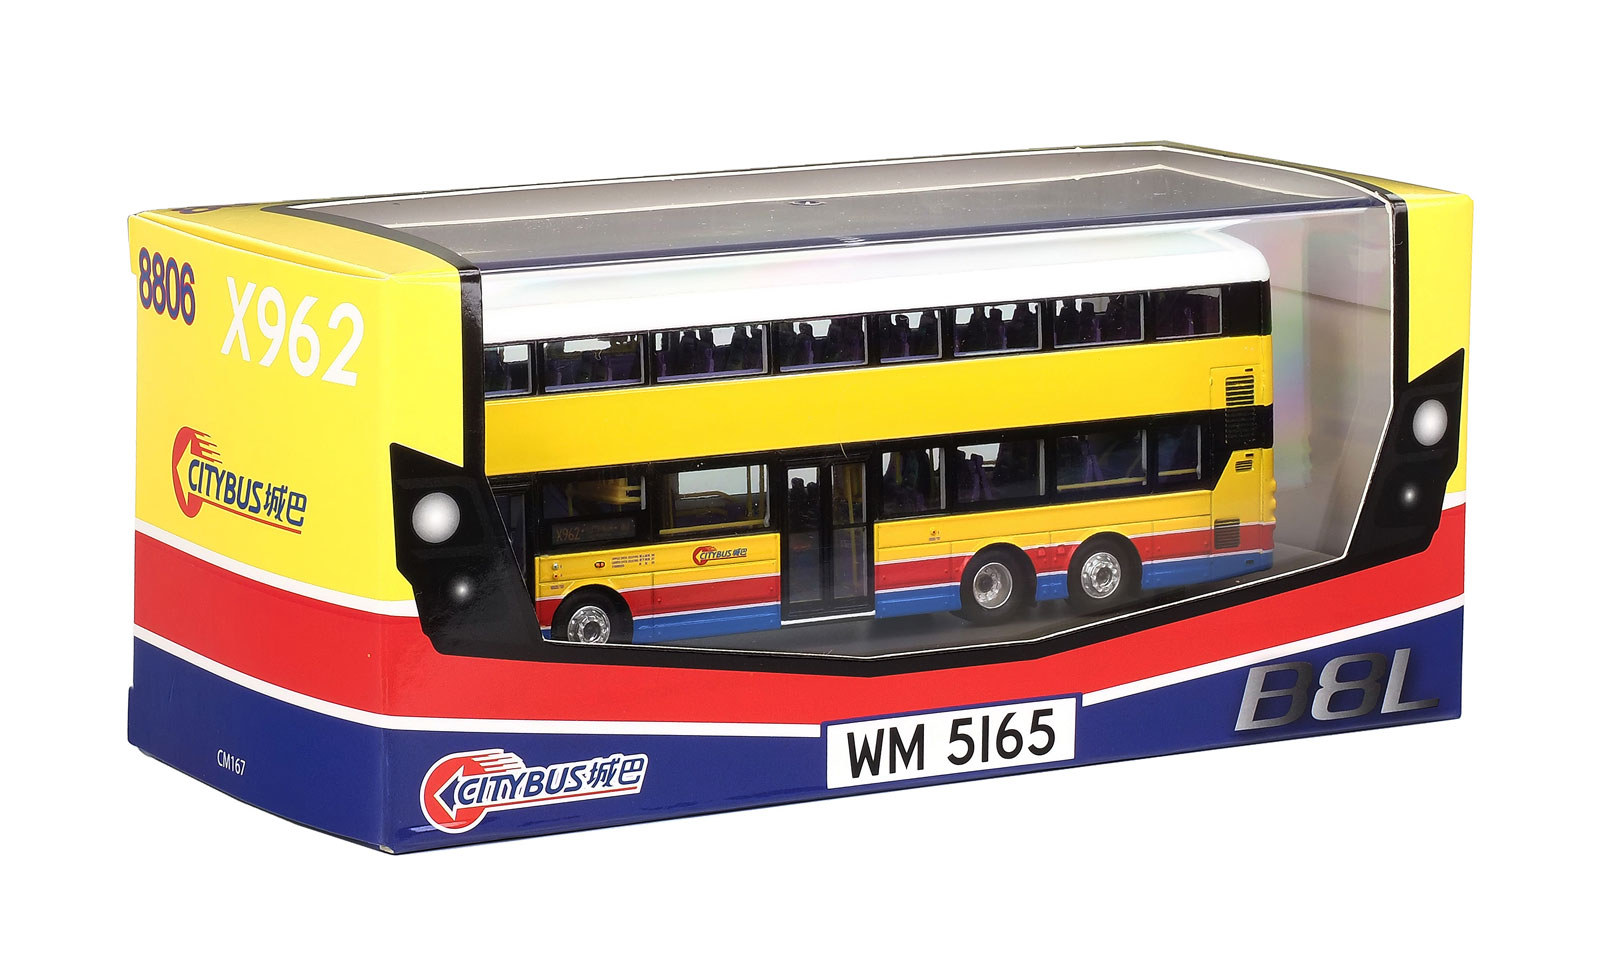 63624 (CM167) - Volvo B8L/Wrights Gemini 3 - Citybus produced by Model 1